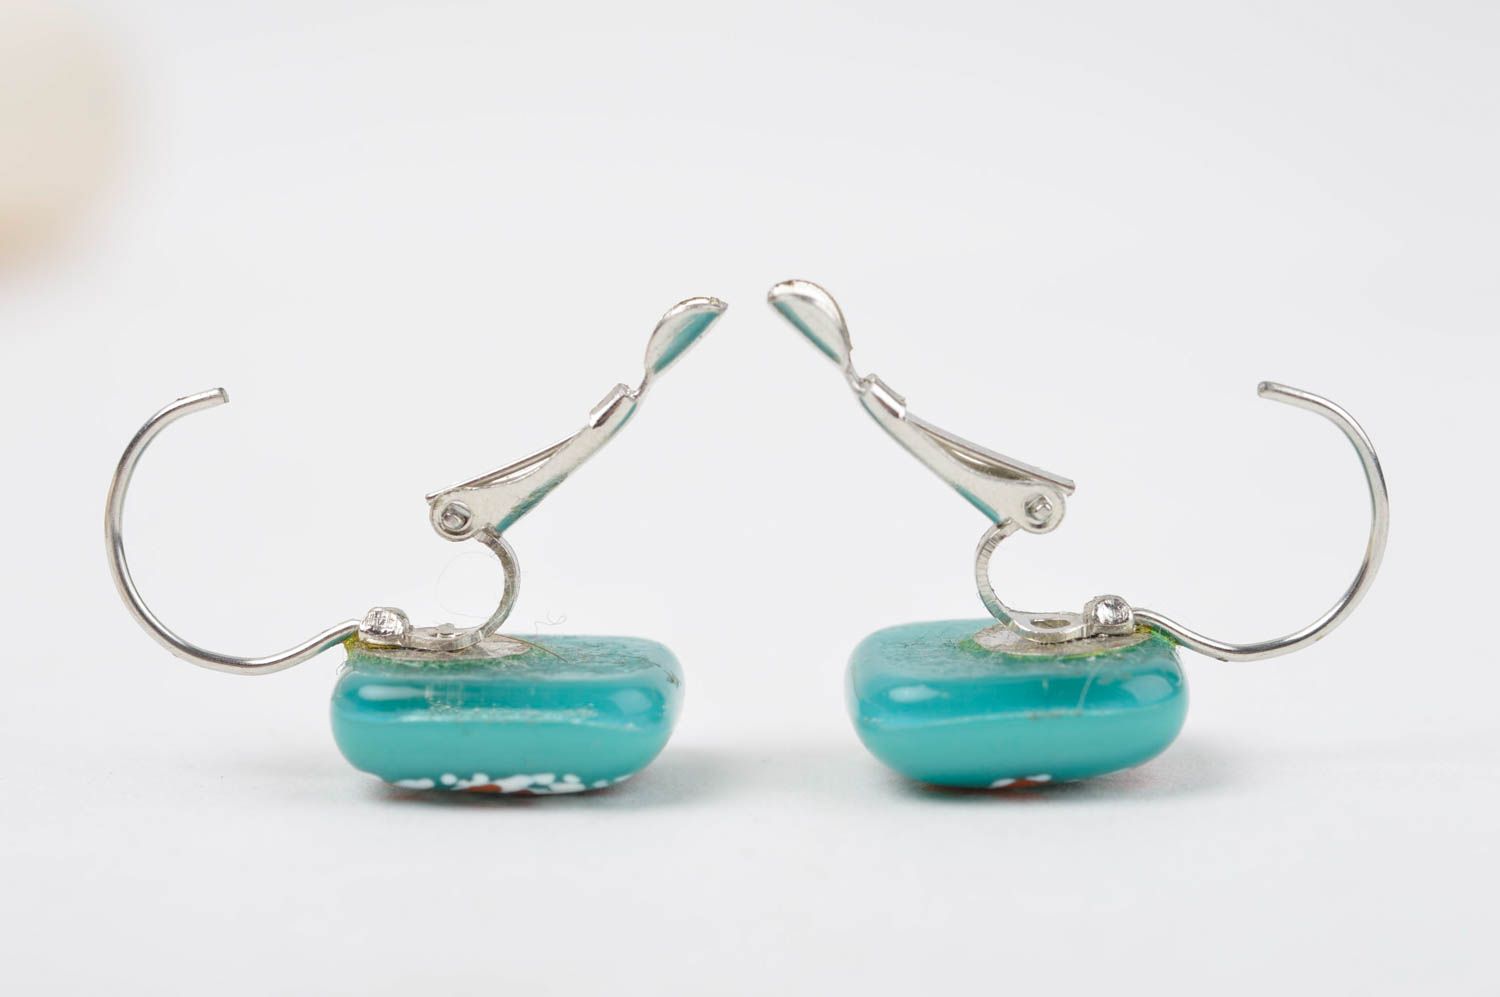 Elegant handmade glass earrings glass art artisan jewelry designs gift ideas photo 4